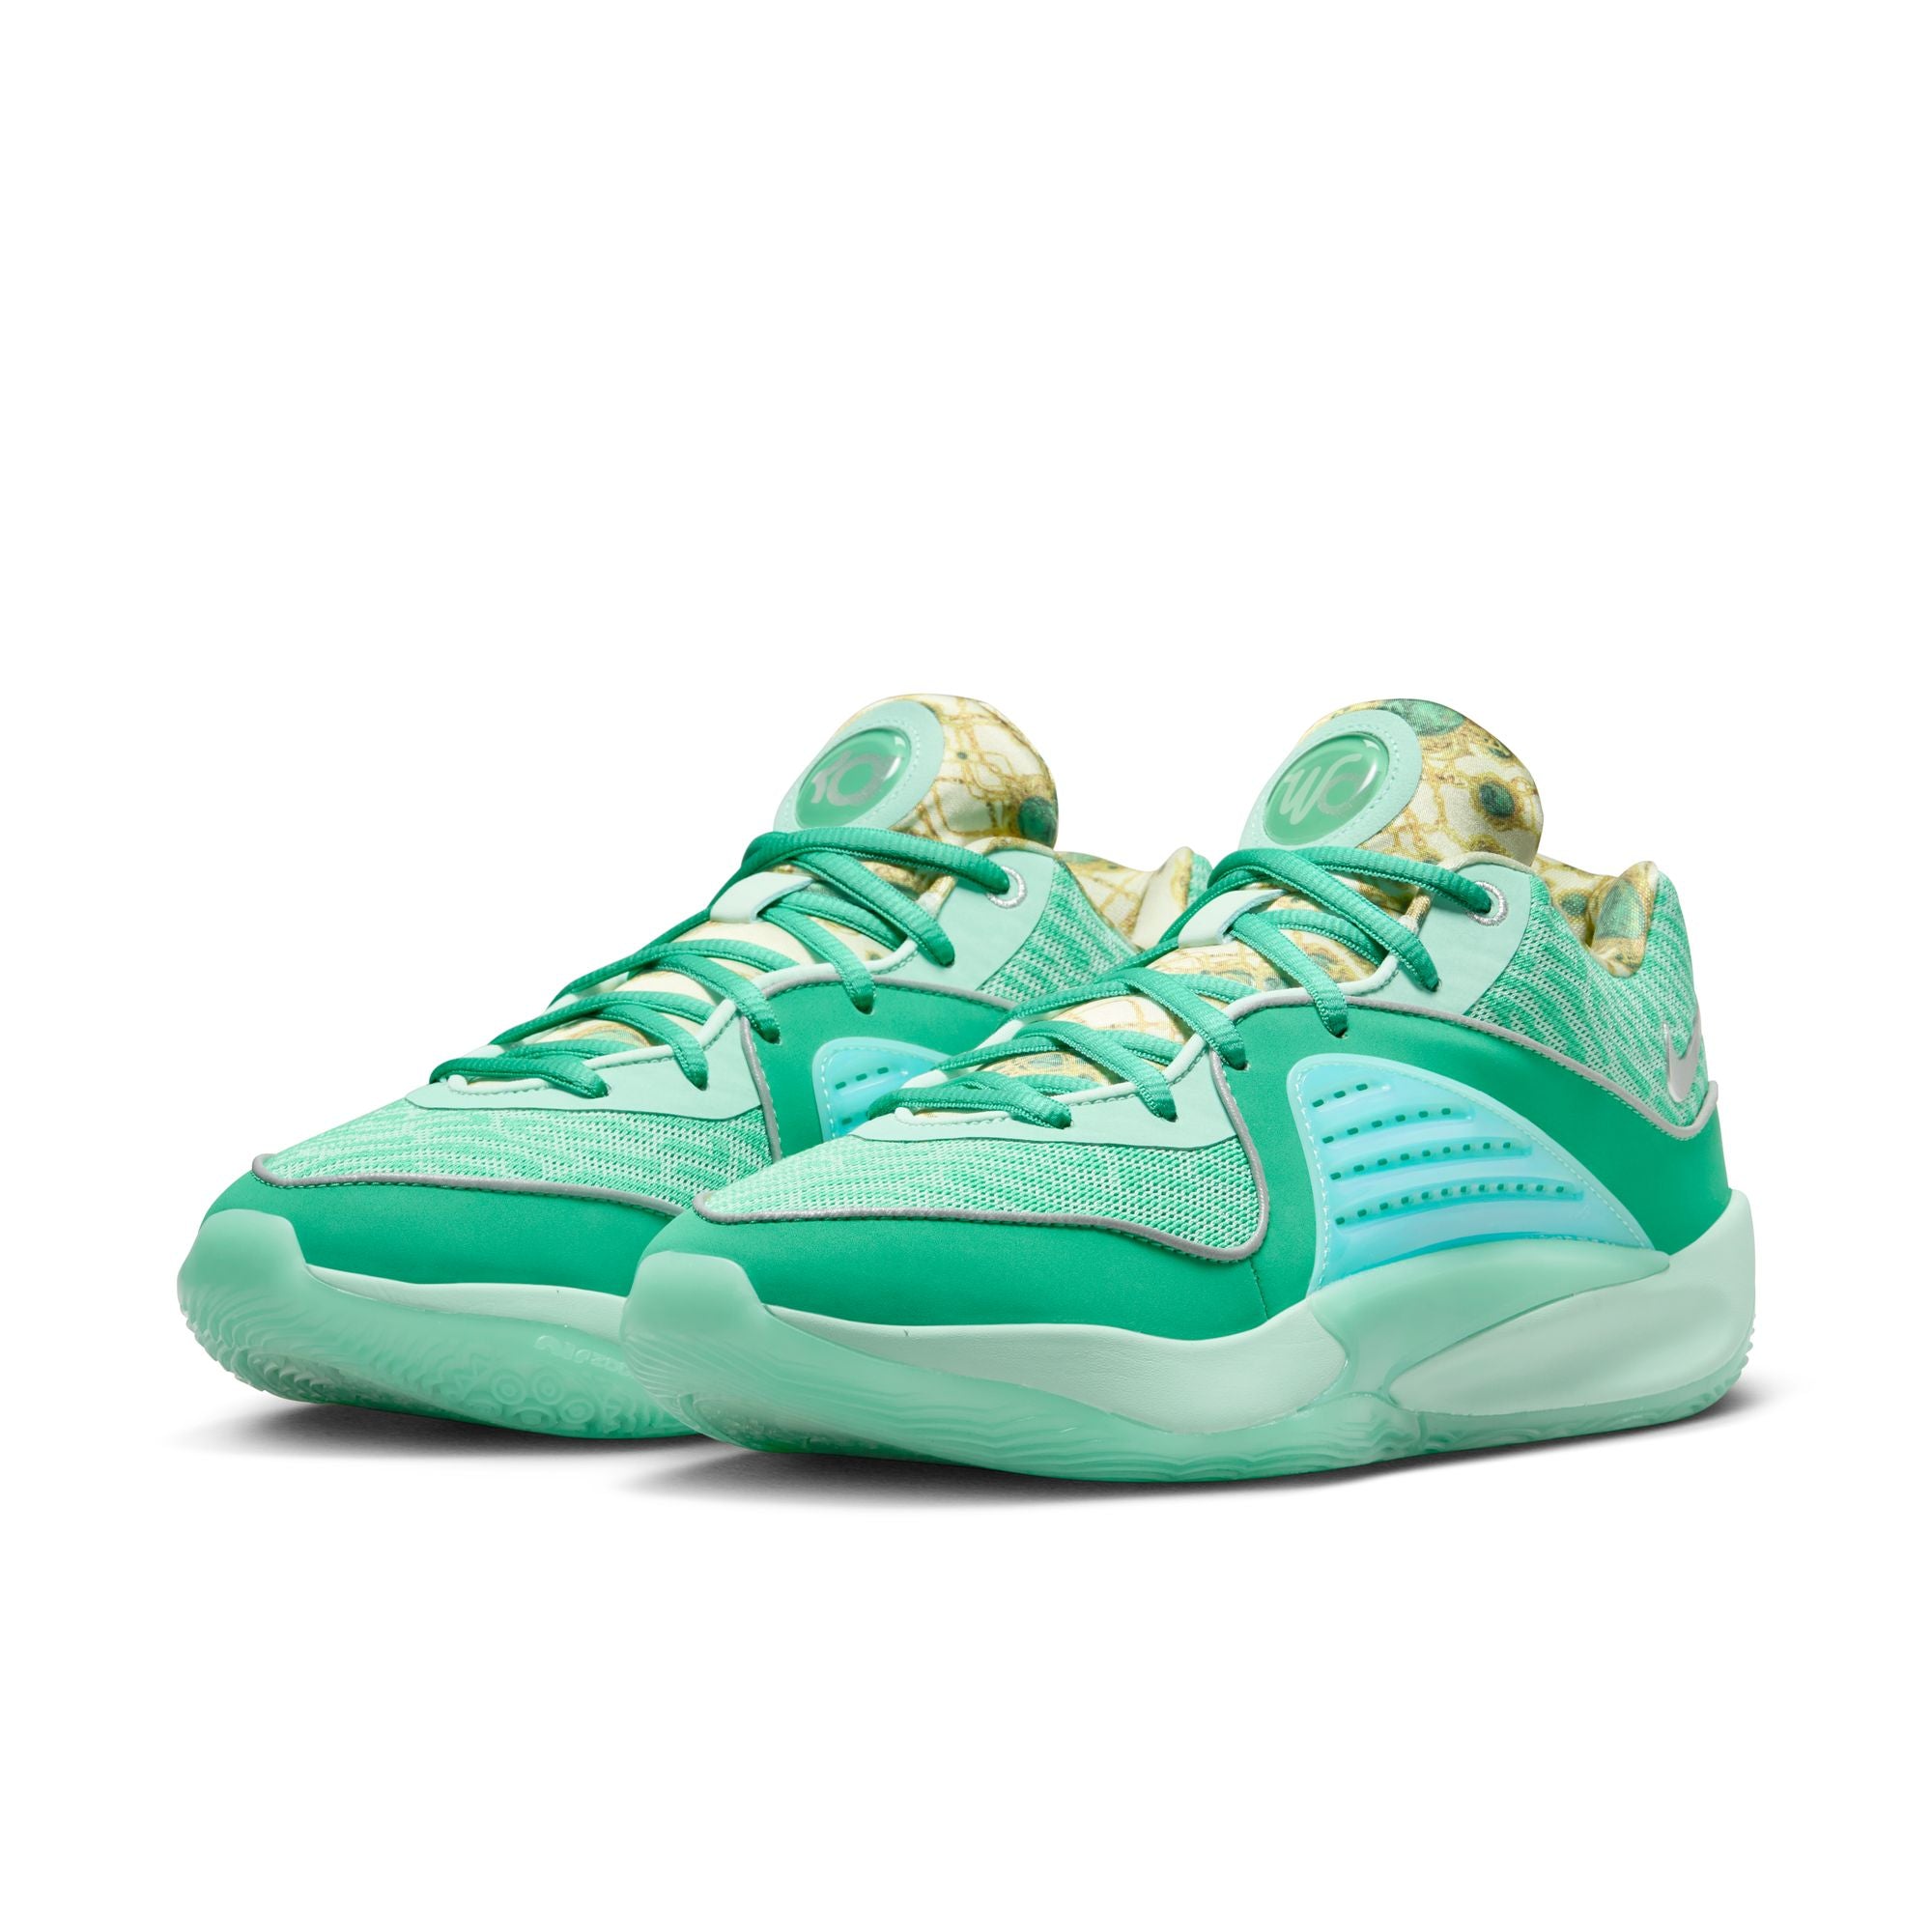 Nike Kevin Durant KD16 "Wanda" Men's Basketball Shoes